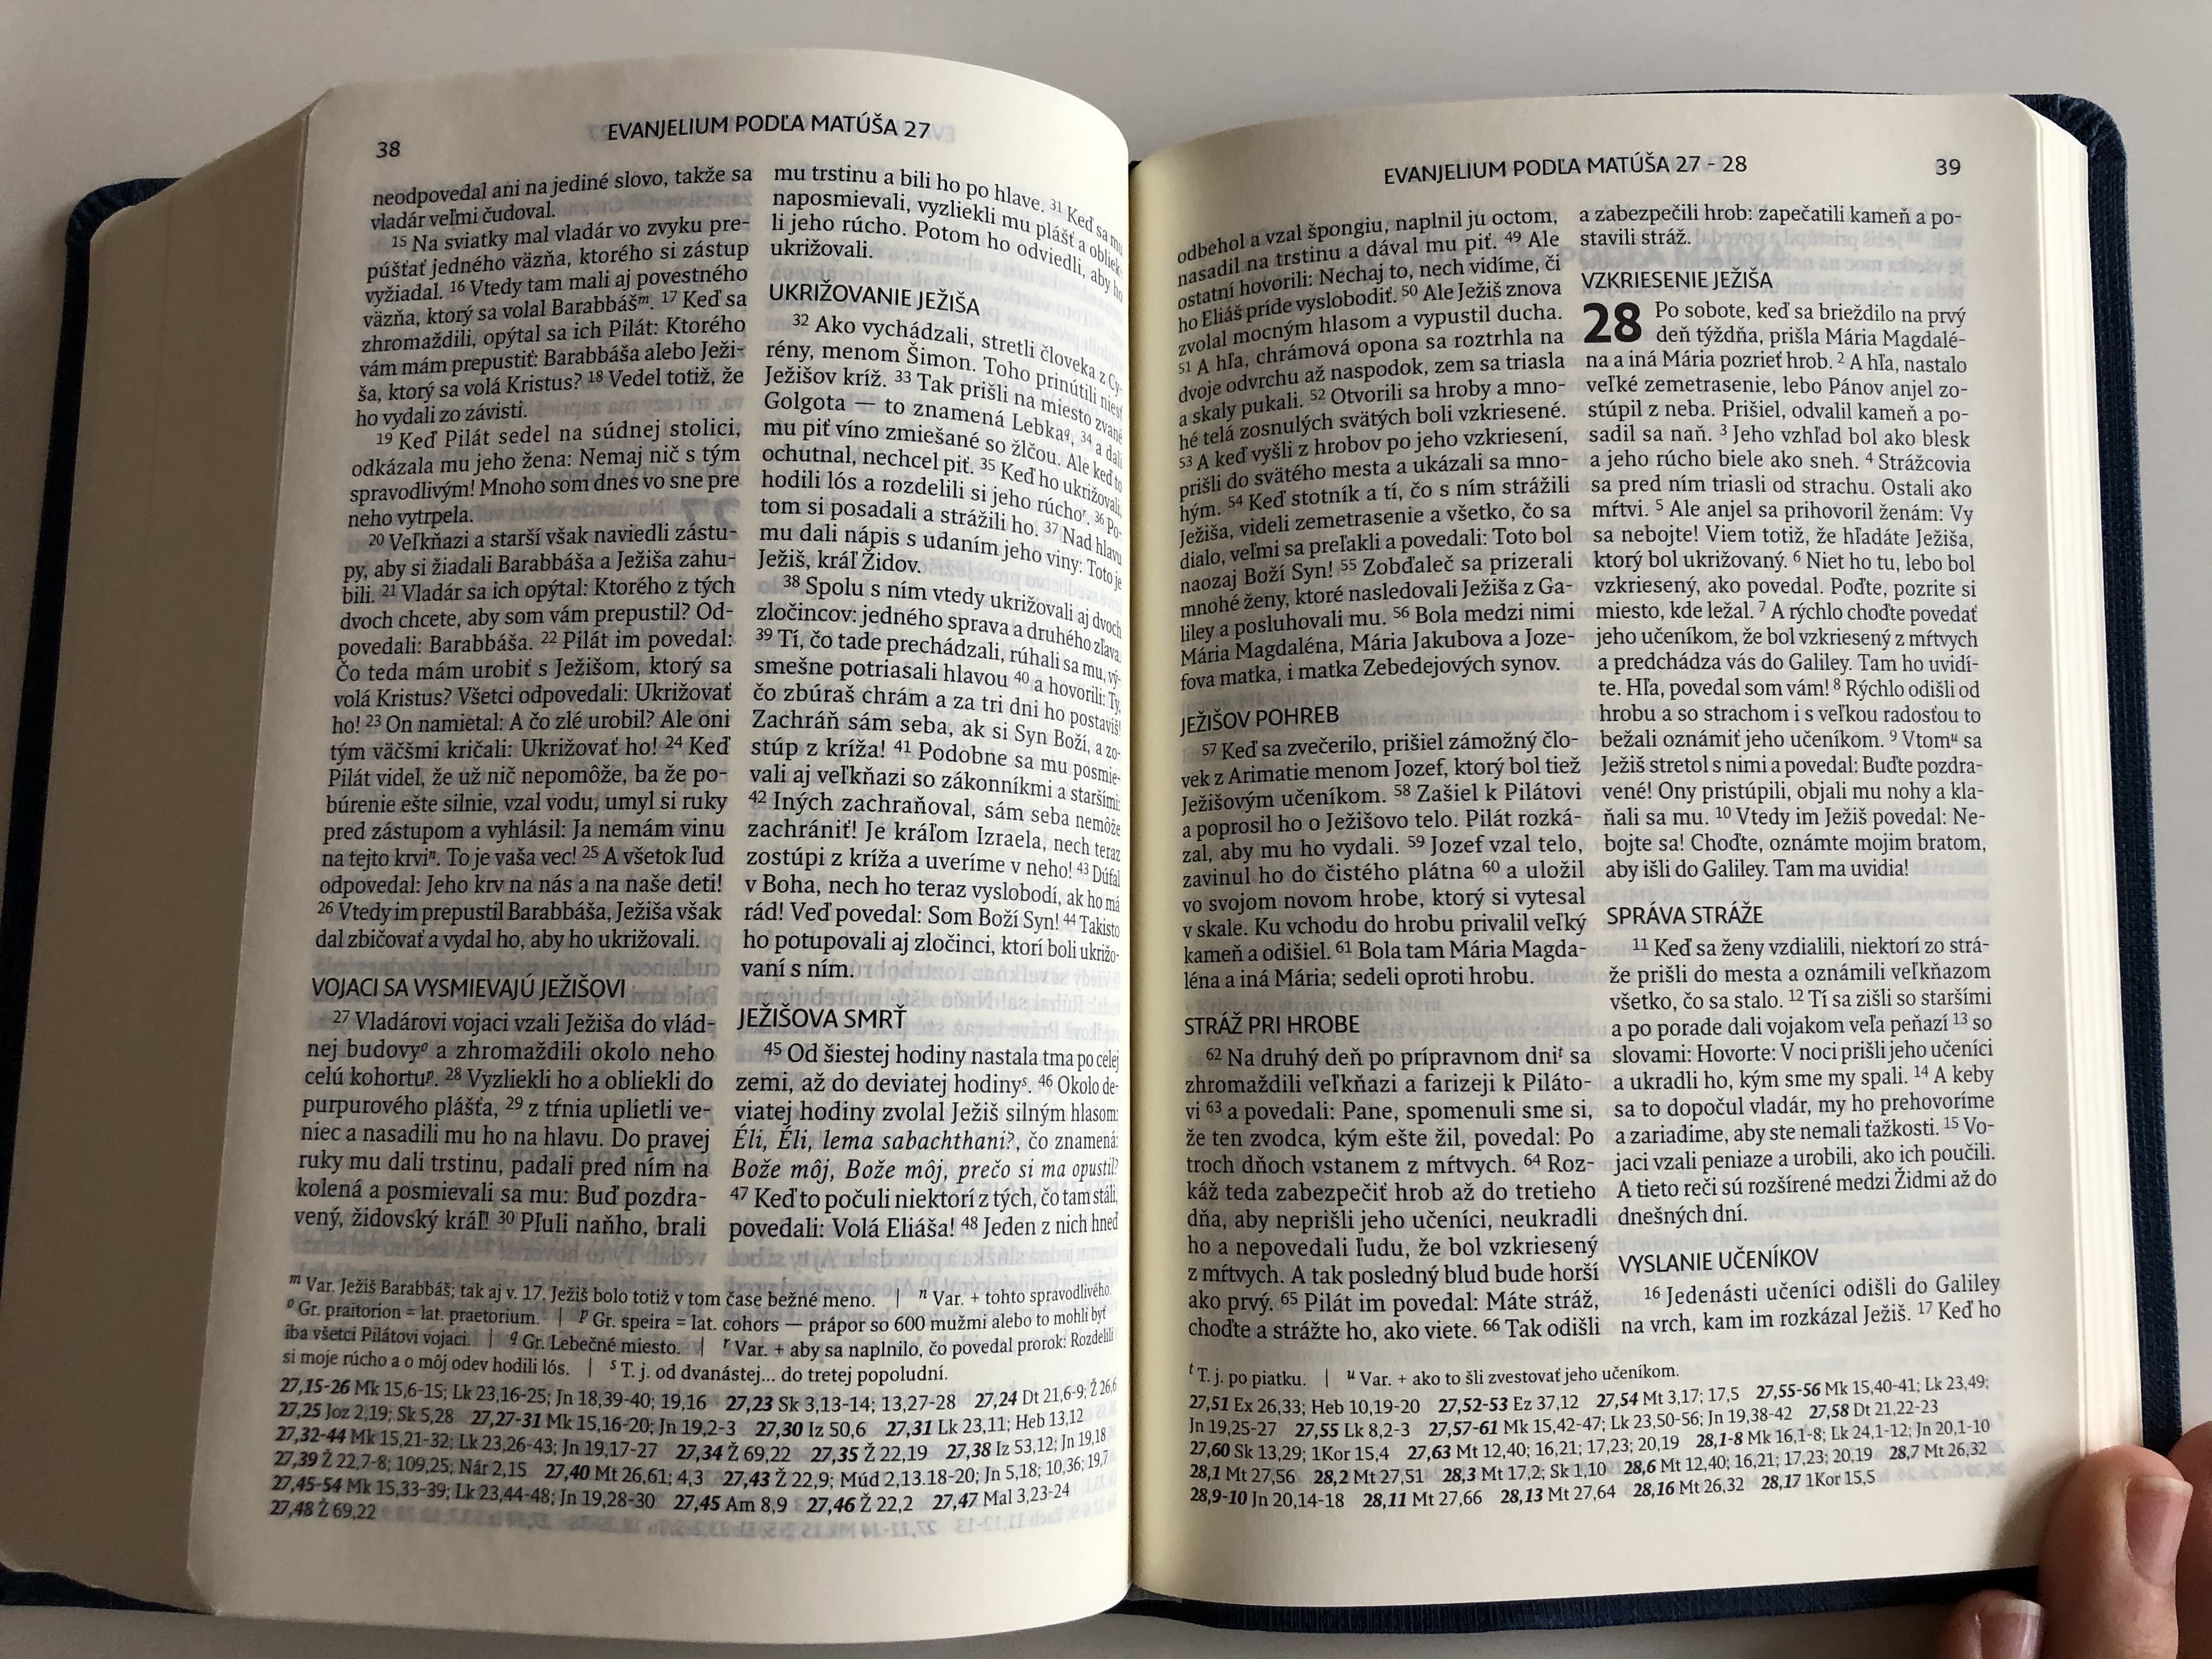 slovak-ecumenical-bible-biblia-slovensk-ekumenick-preklad-9.jpg